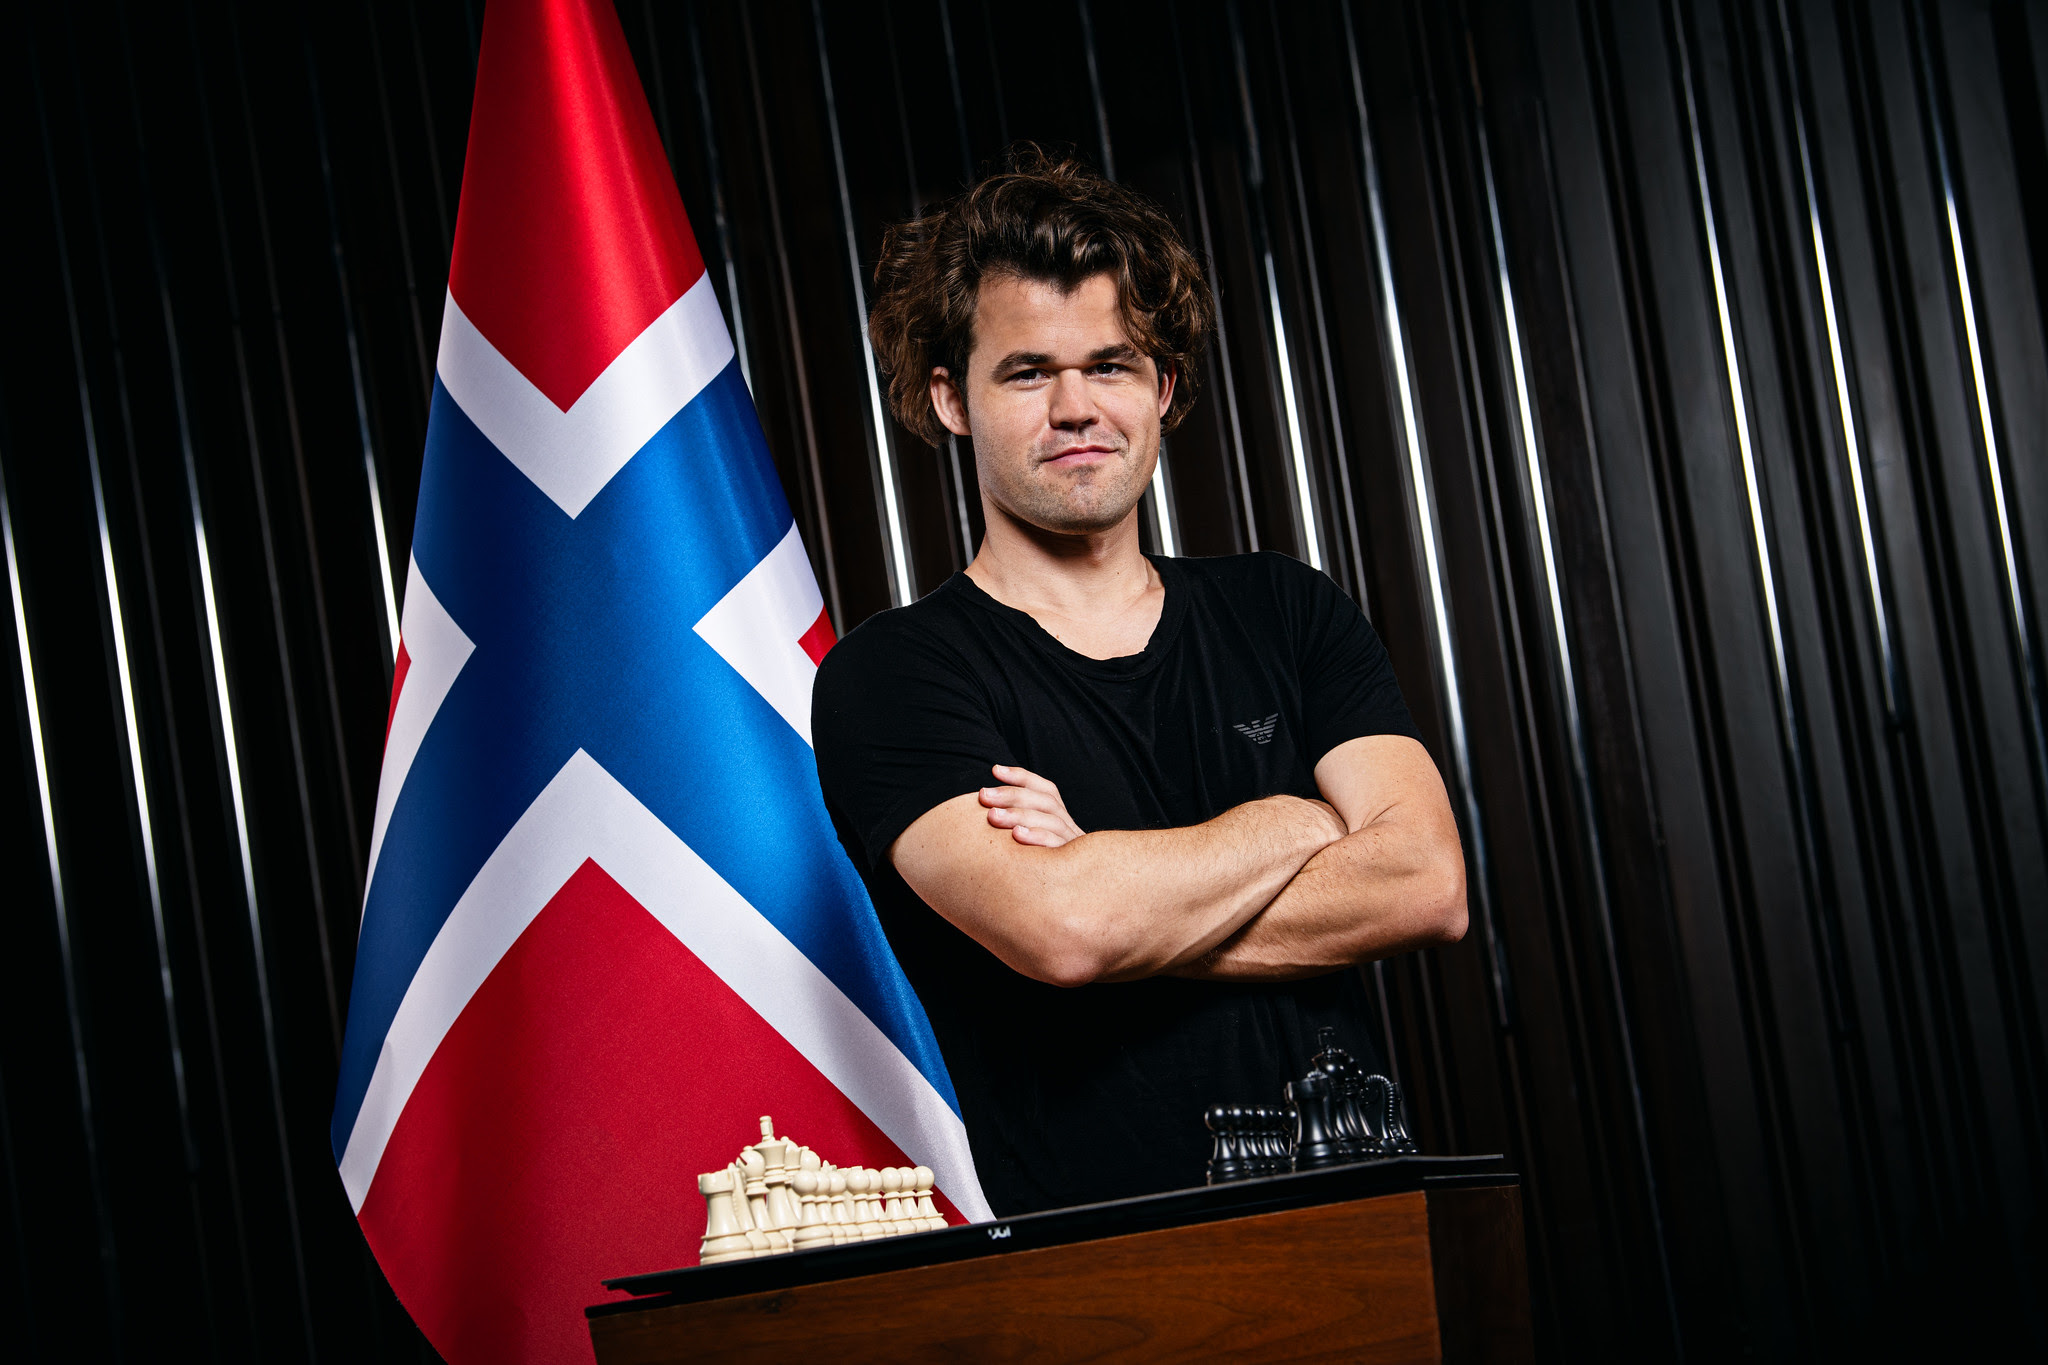 World chess champion Magnus Carlsen gives up crown